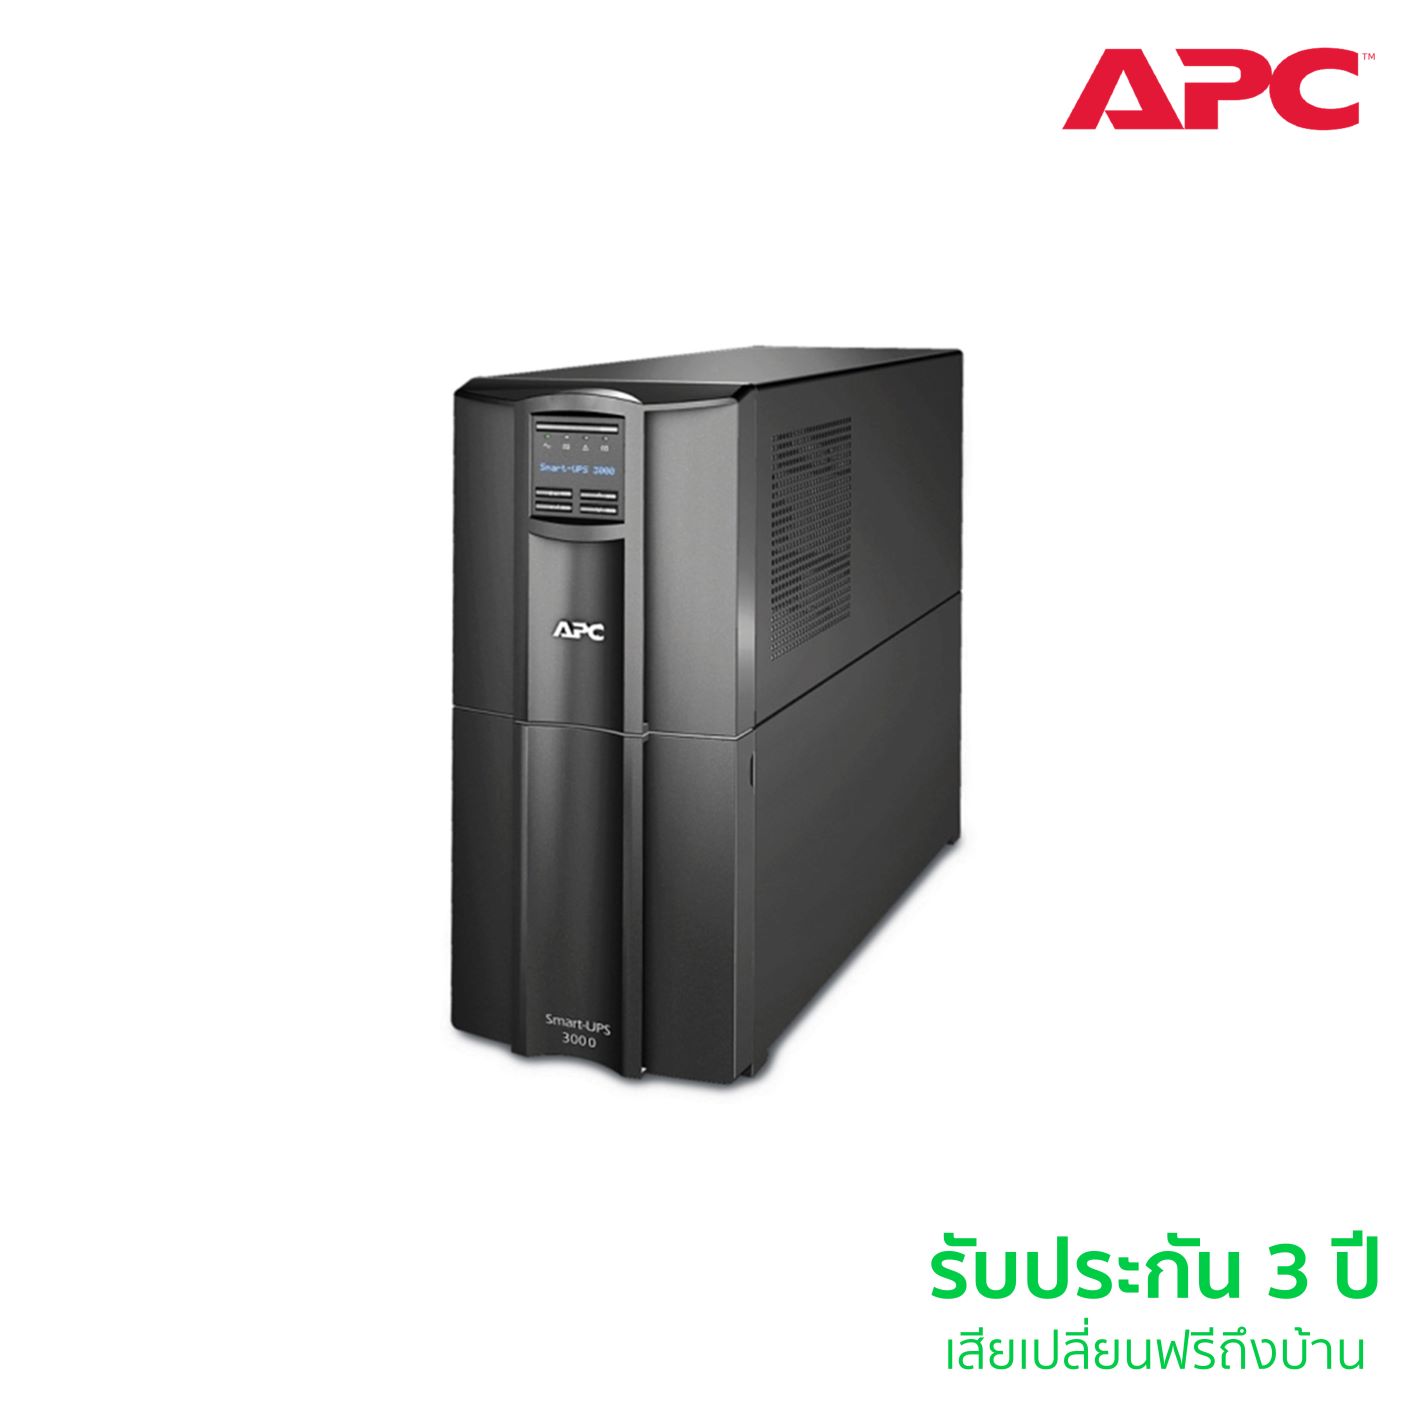 APC Smart- Easy UPS SMT3000IC (3000VA/2700Watt) แบบตั้งพื้น 2U AVR Sinewave มี SmartConnect ตรวจสอบผ่านมือถือ จอ LCD ใช้คู่ Server Network